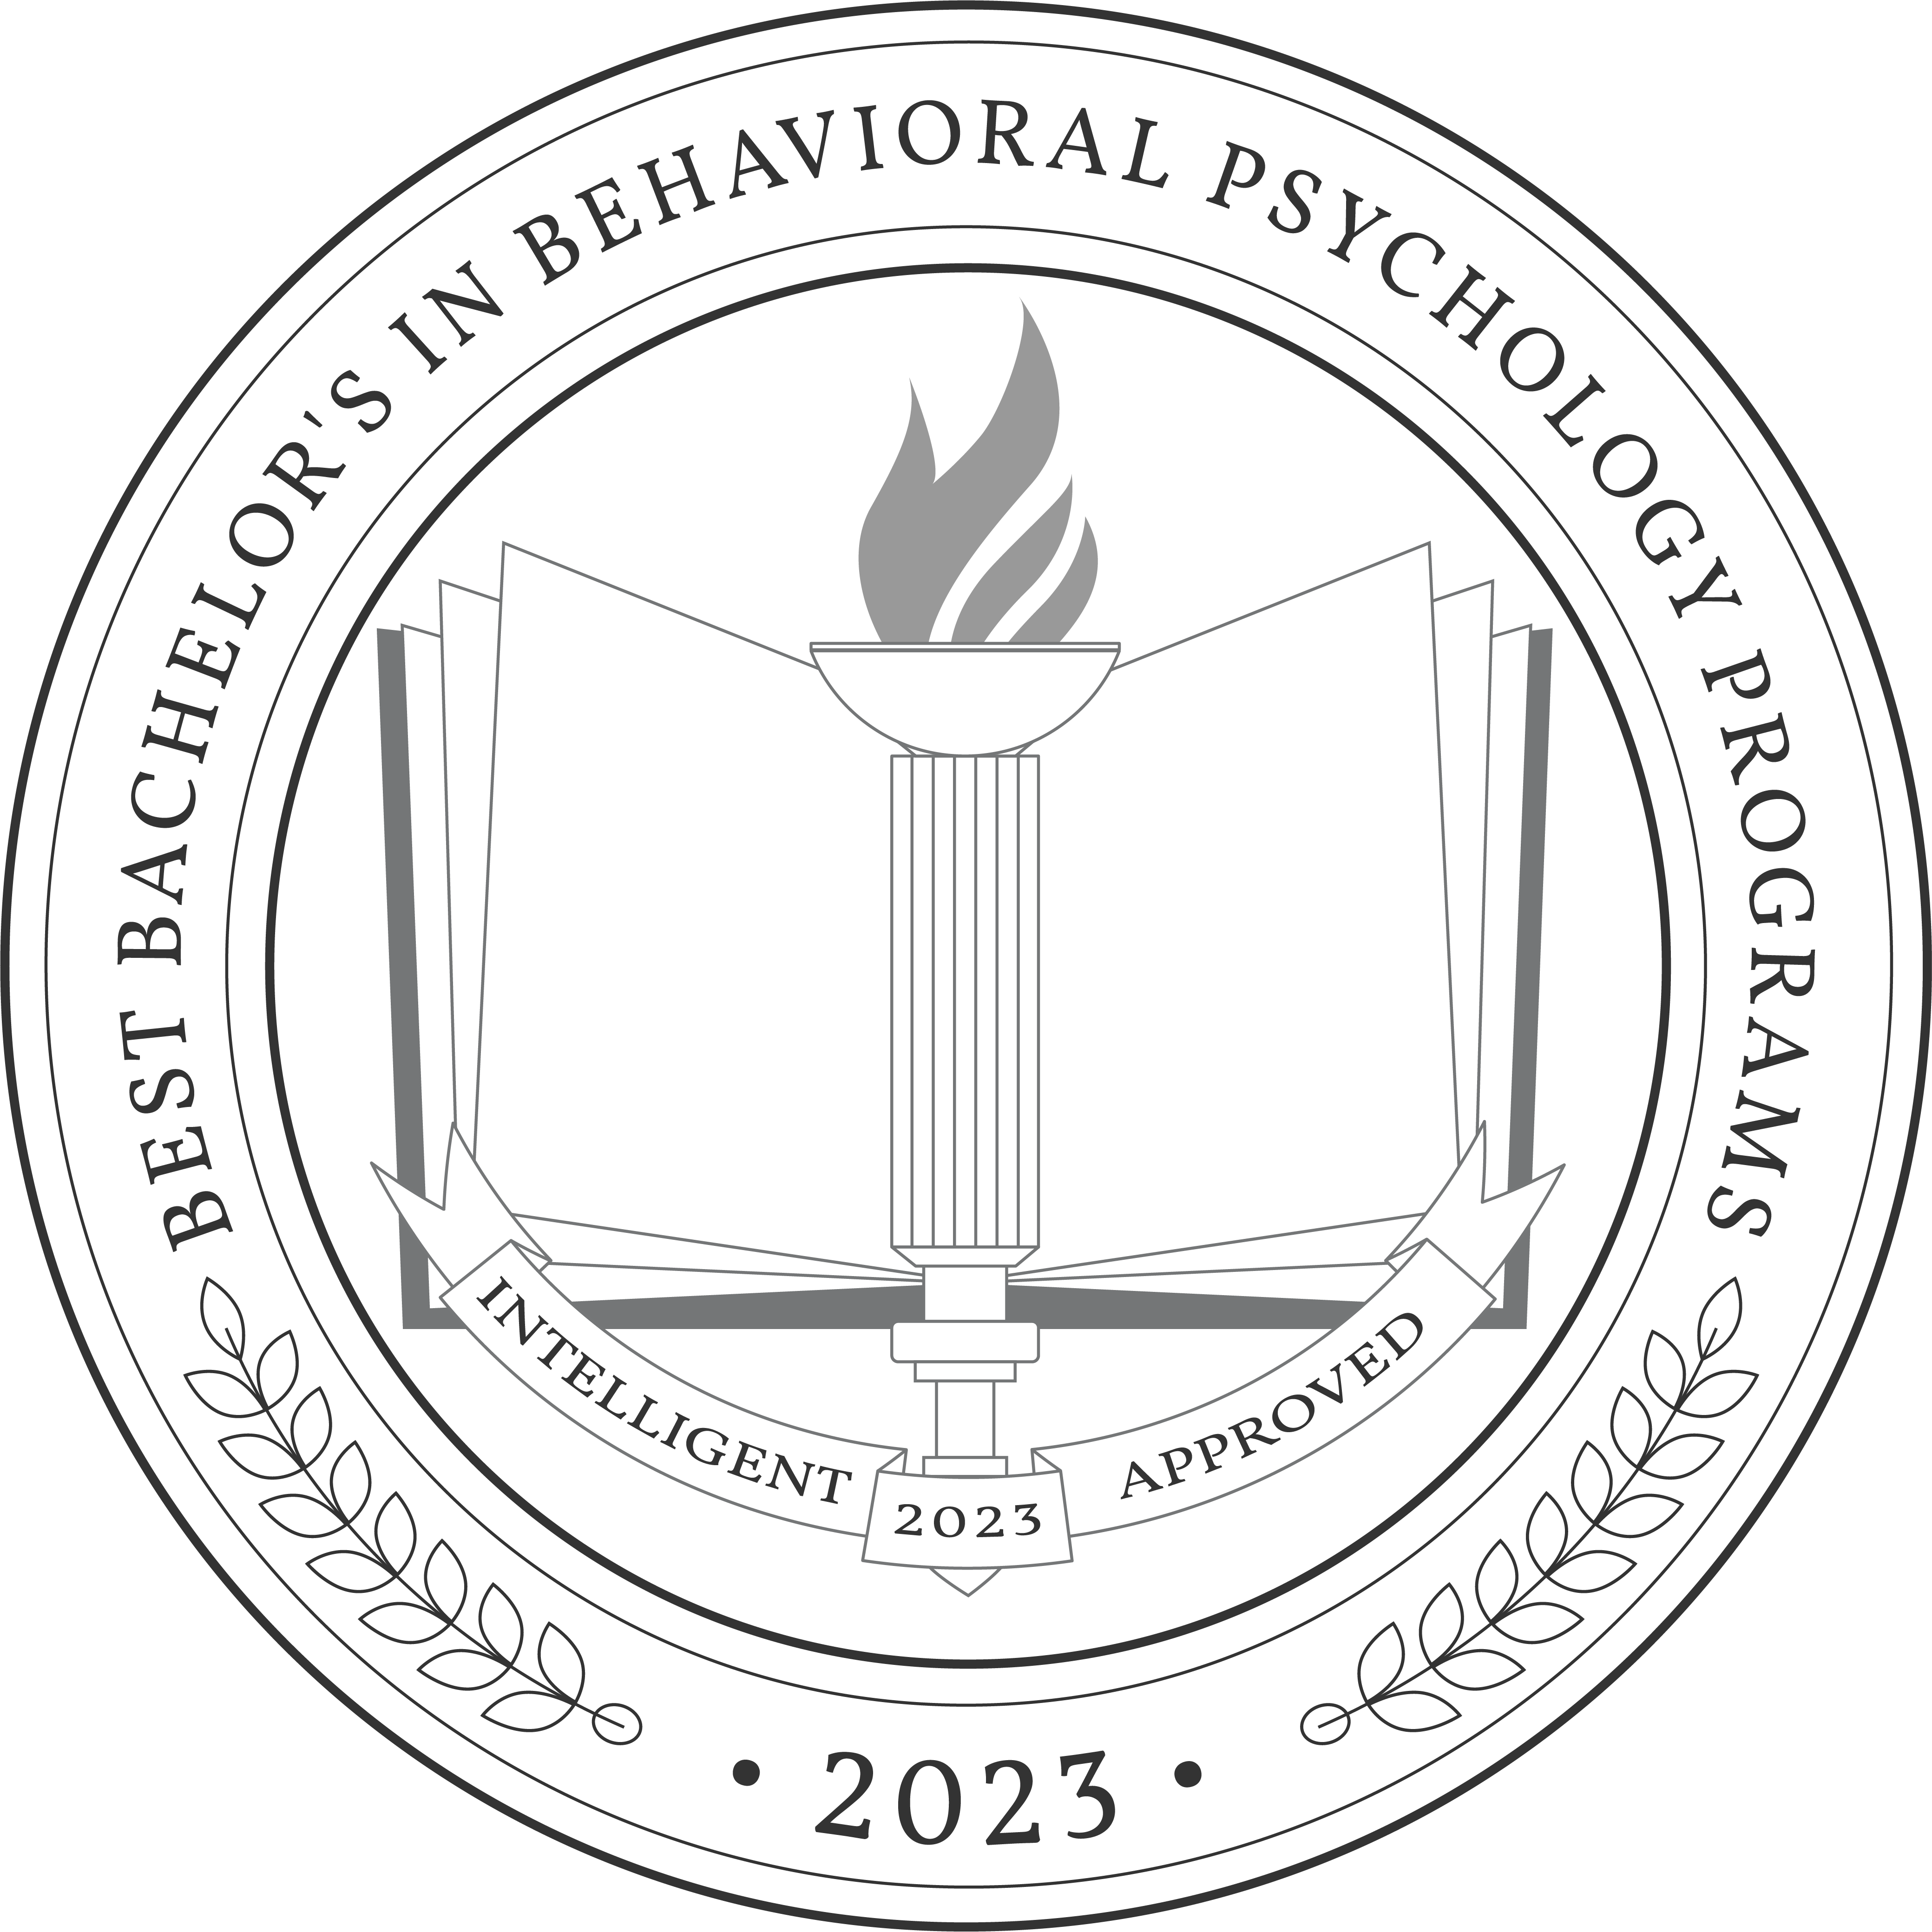 Behavioral Psychology Programs 2023